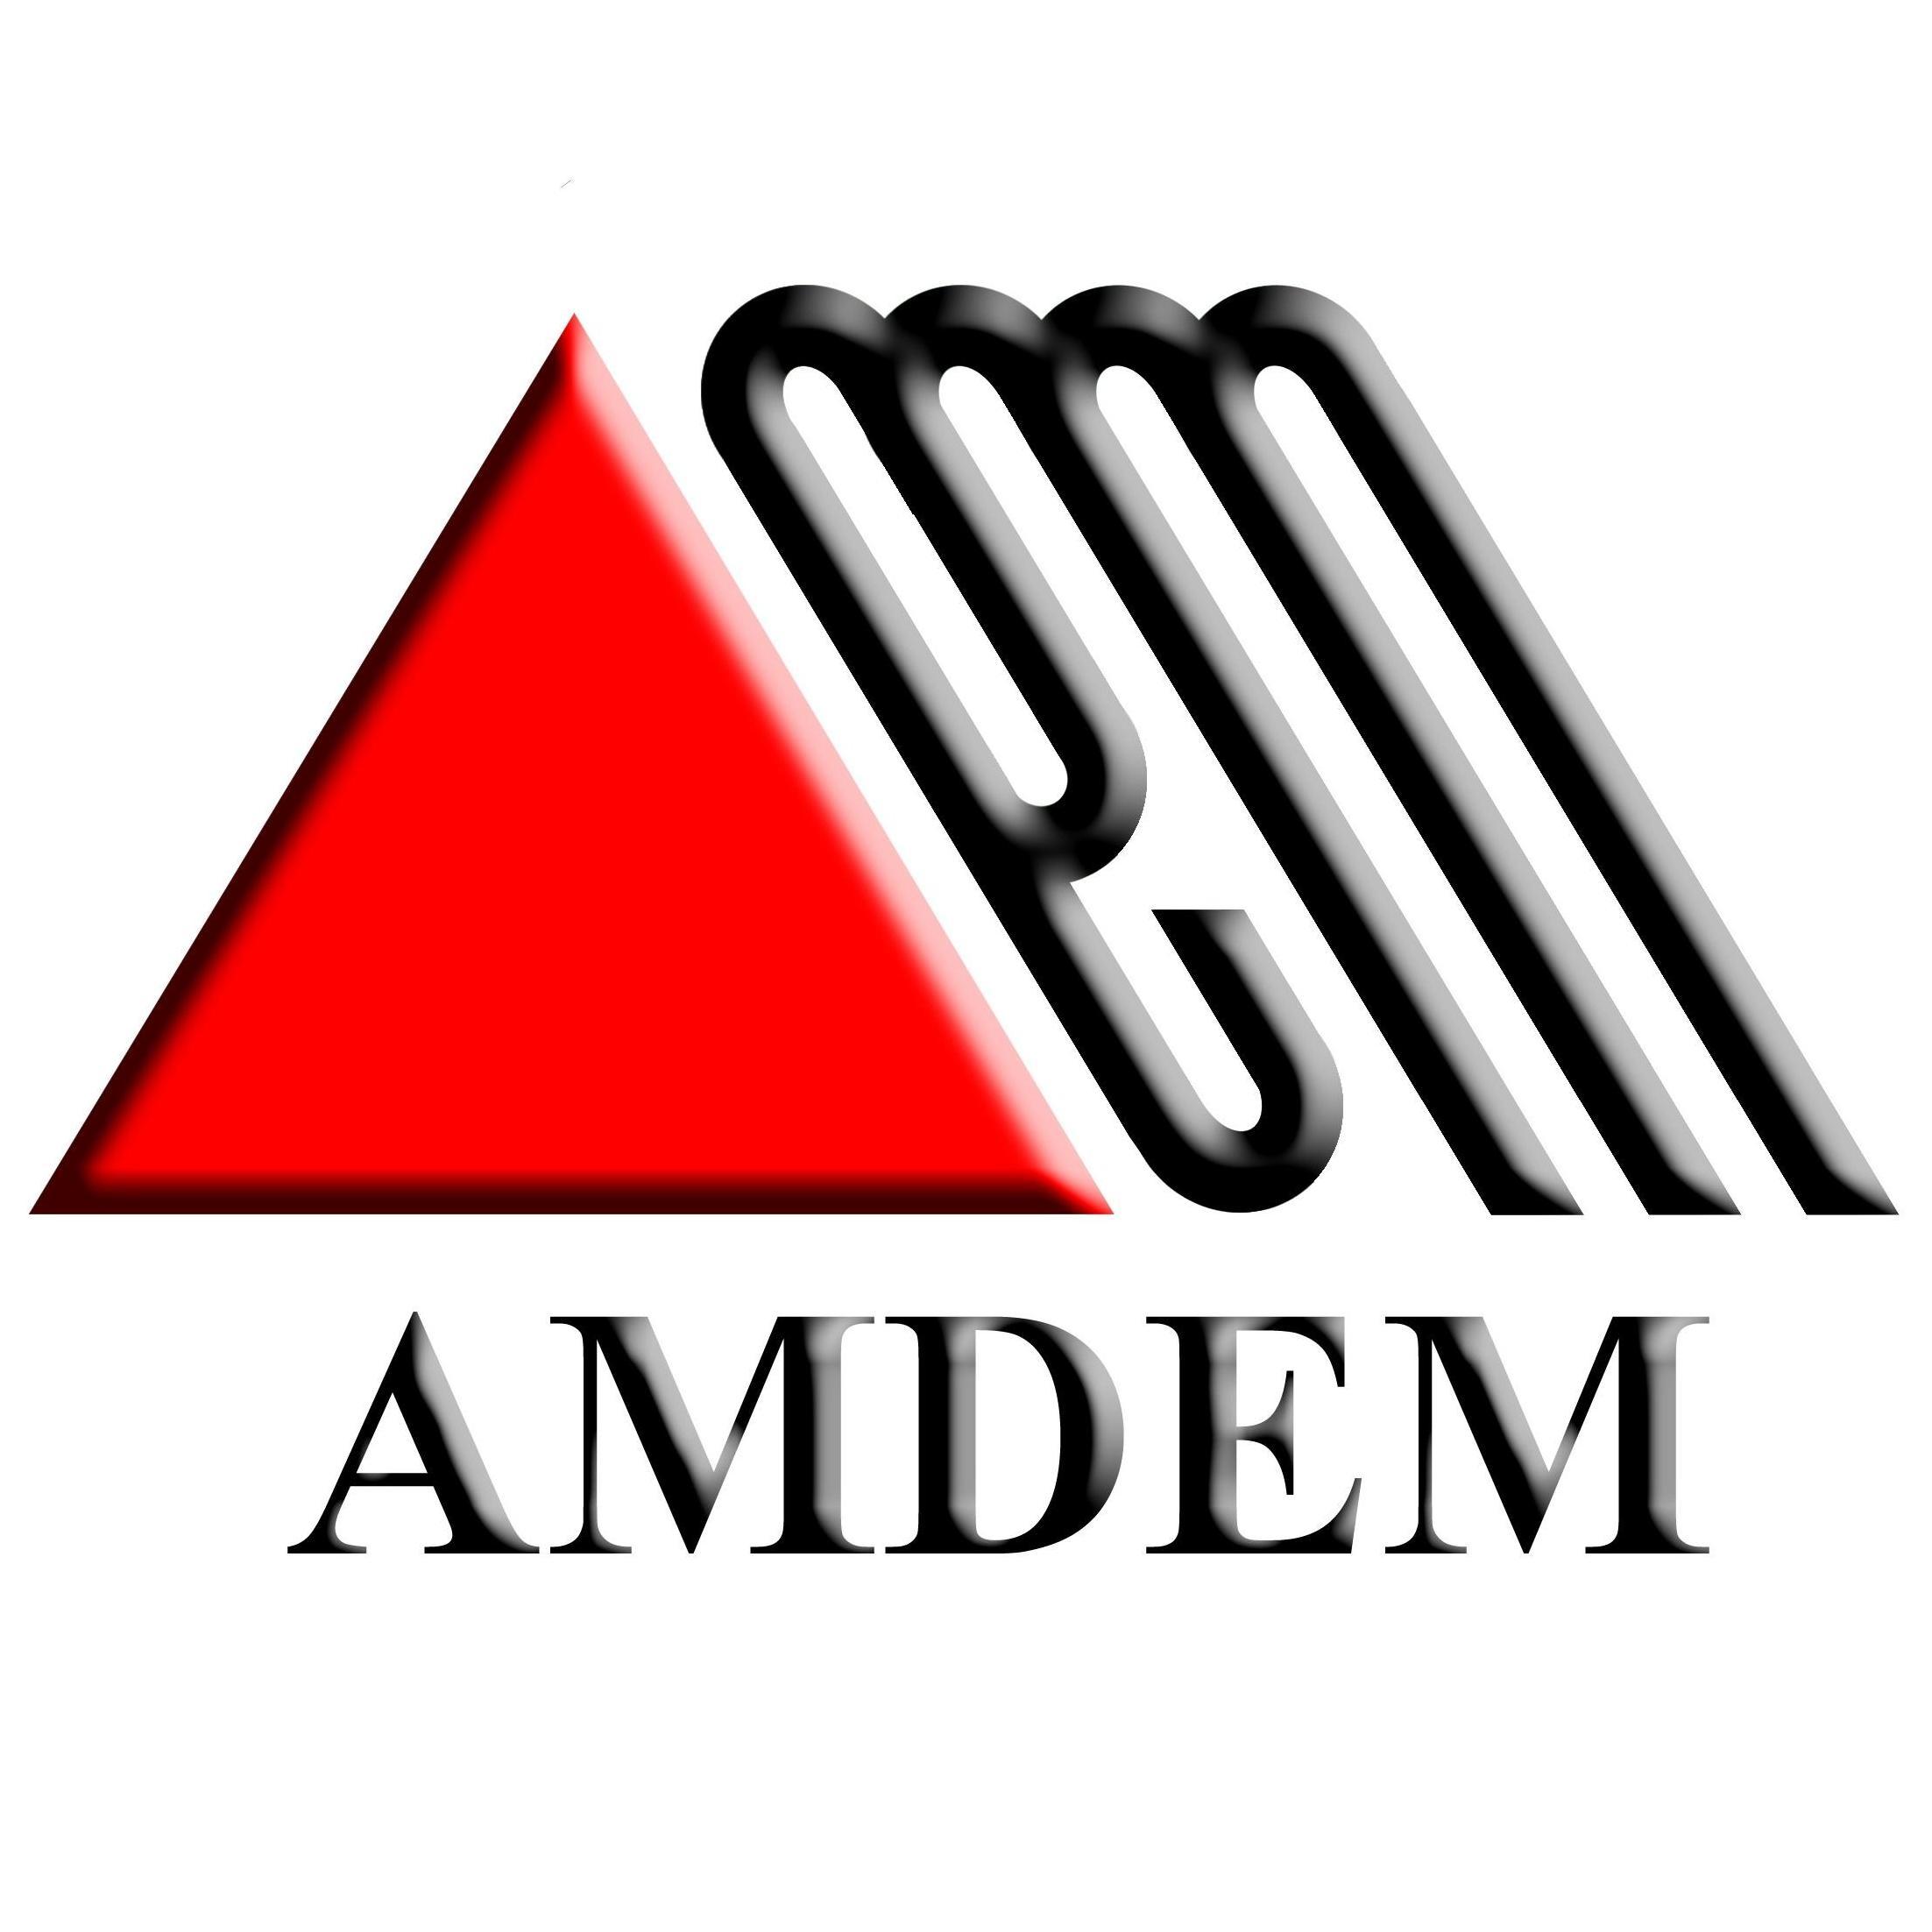 AMDEM - Asociación Mostoleña de Esclerosis Múltiple Profile, news, ratings and communication